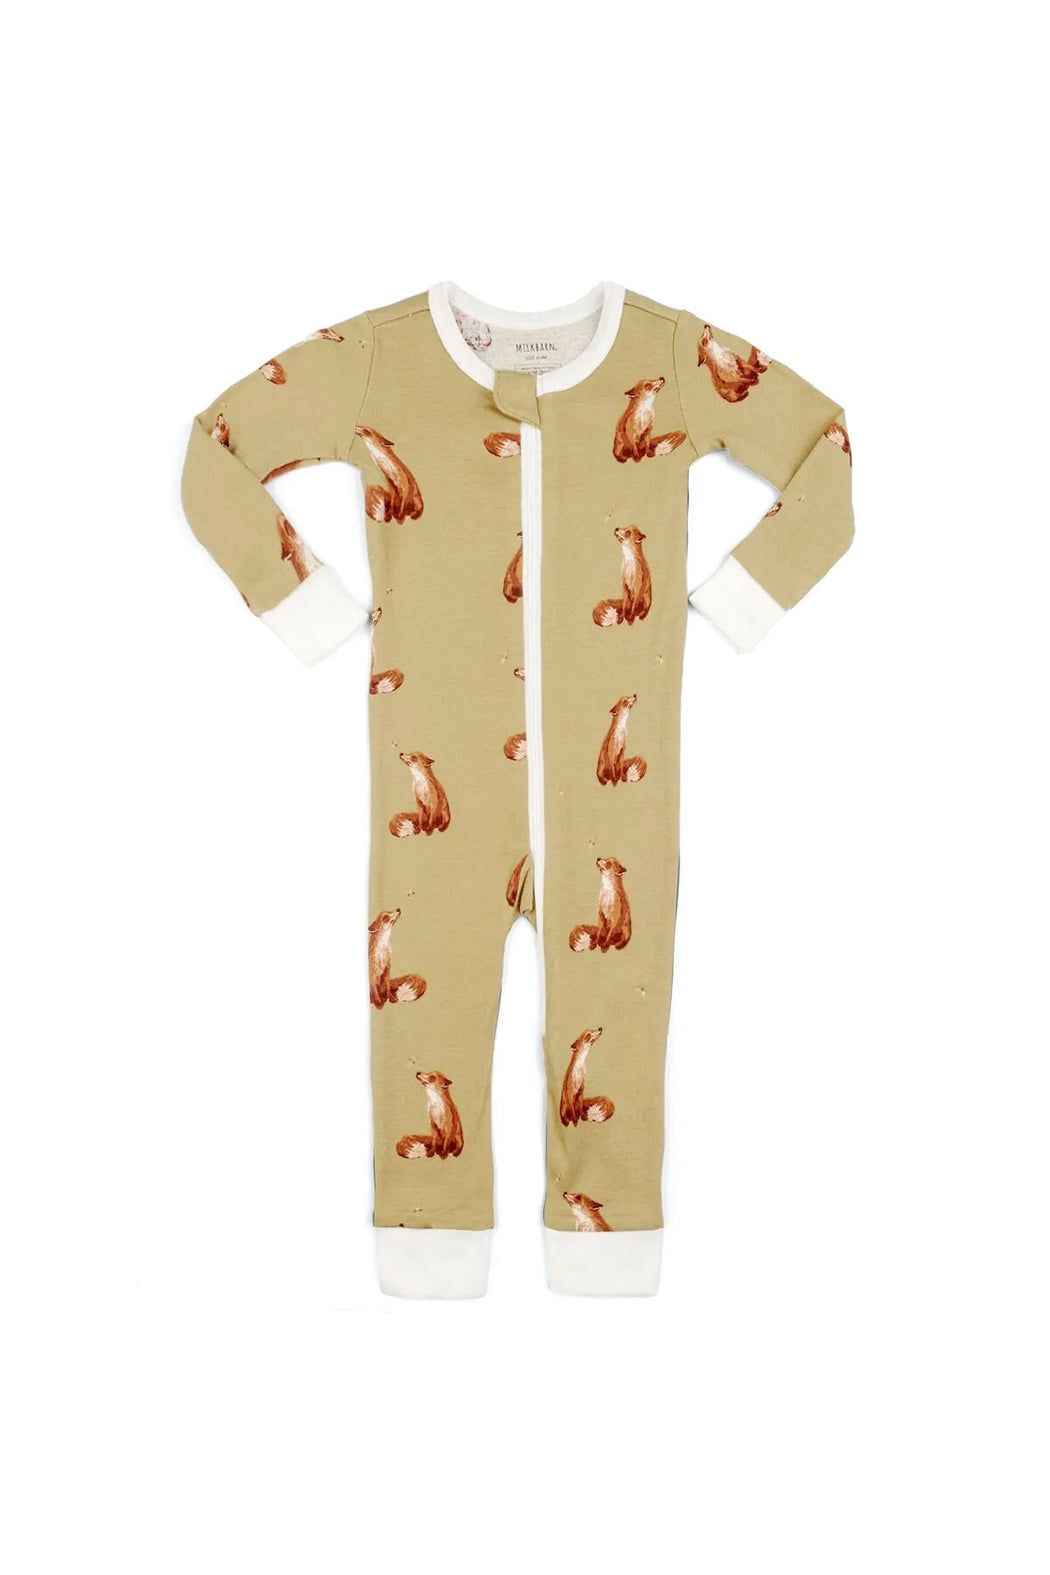 Milkbarn Zipper Pajamas - Gold Fox